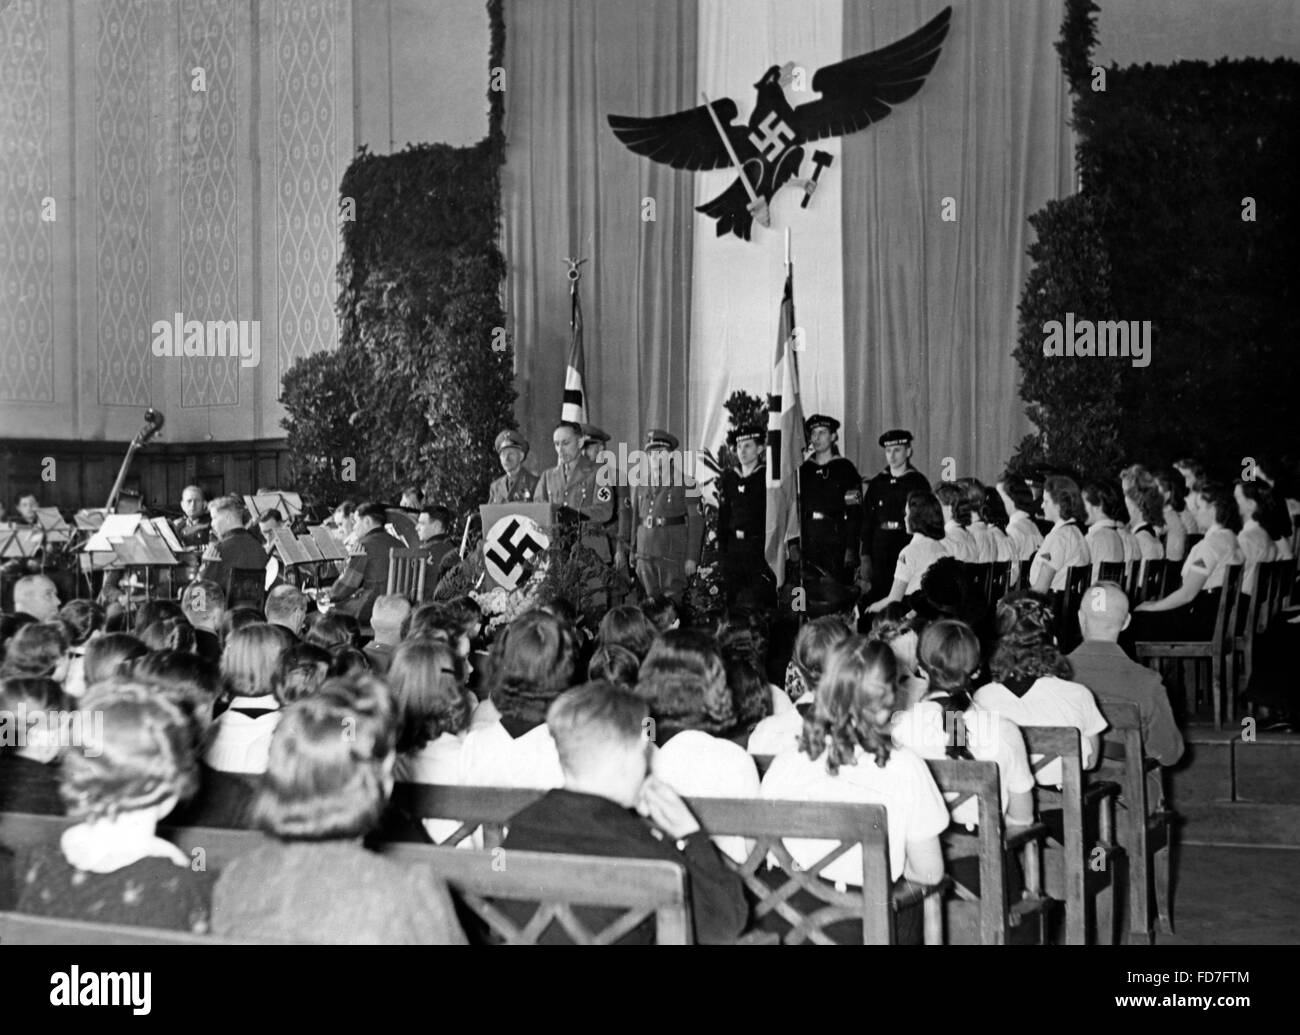 Verpflichtung der Jugend (Commitment of the Youth) ceremony in the Wedding School in Berlin-Lichterfelde, 1942 Stock Photo